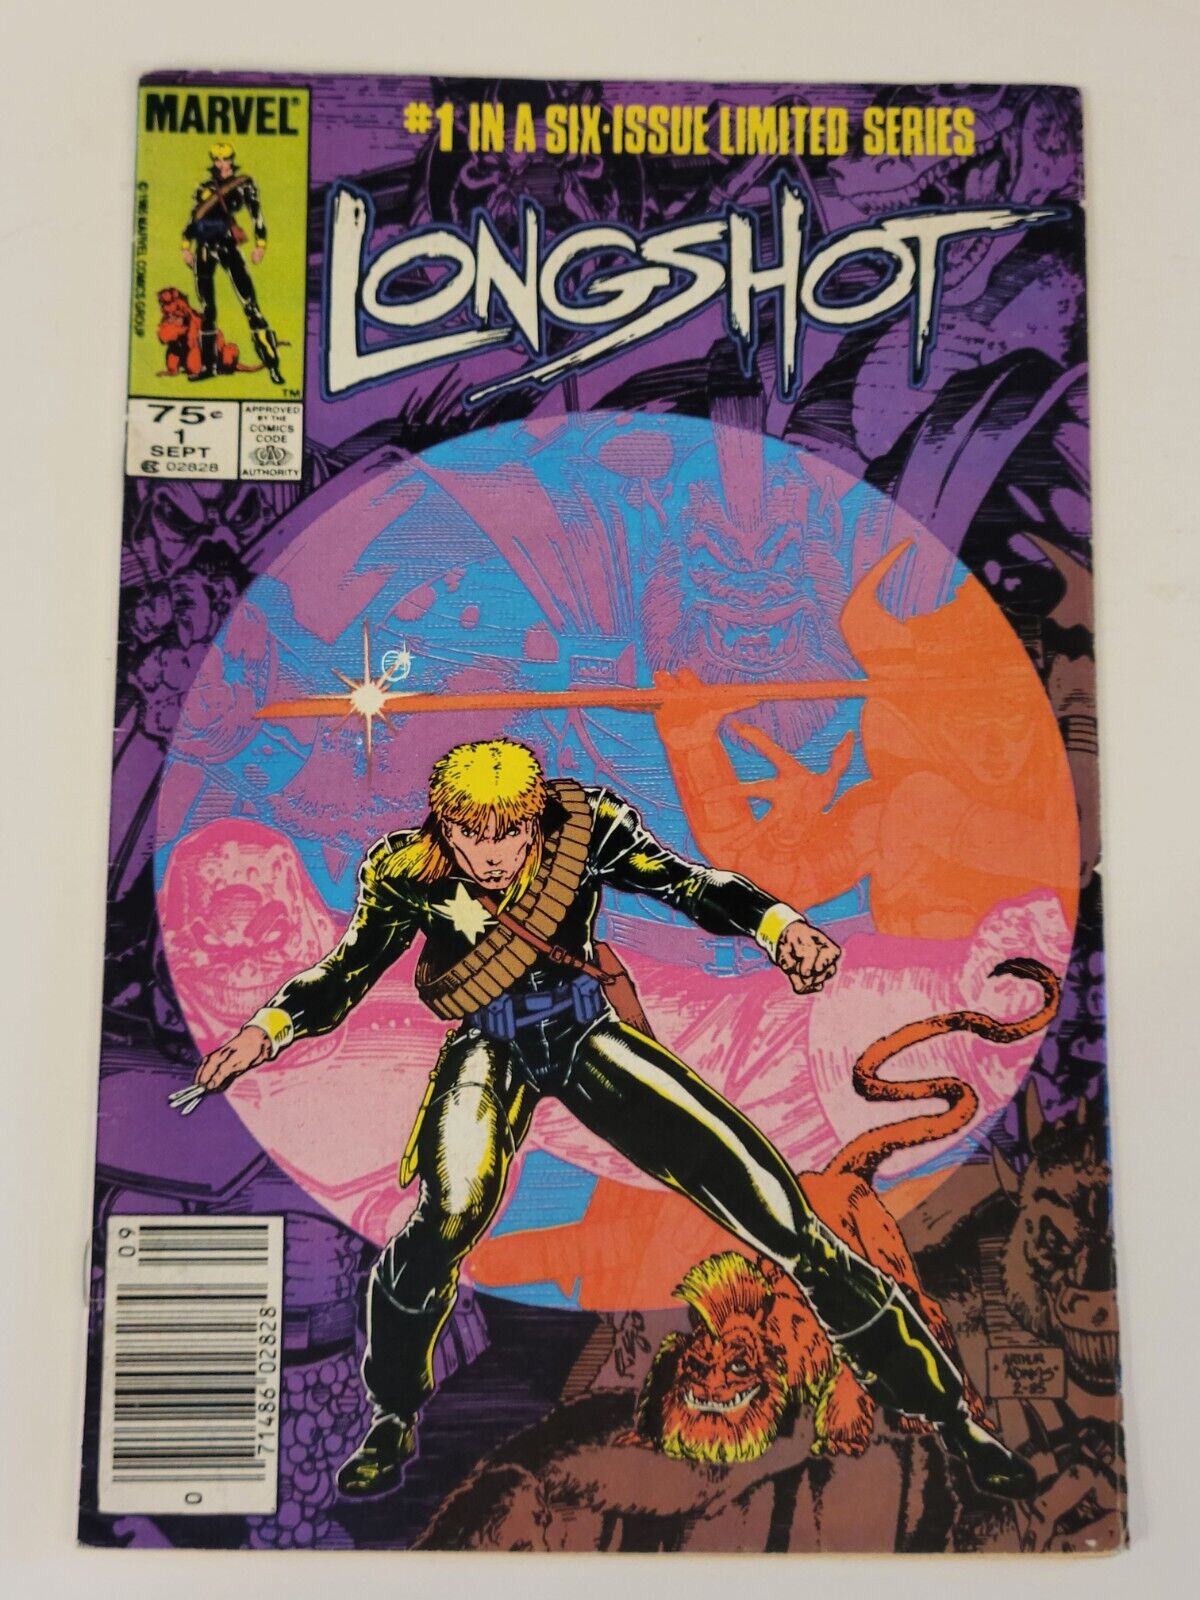 LONGSHOT #1 - Newsstand Edition - 1st App of Longshot - Marvel Comics - SEP 1985